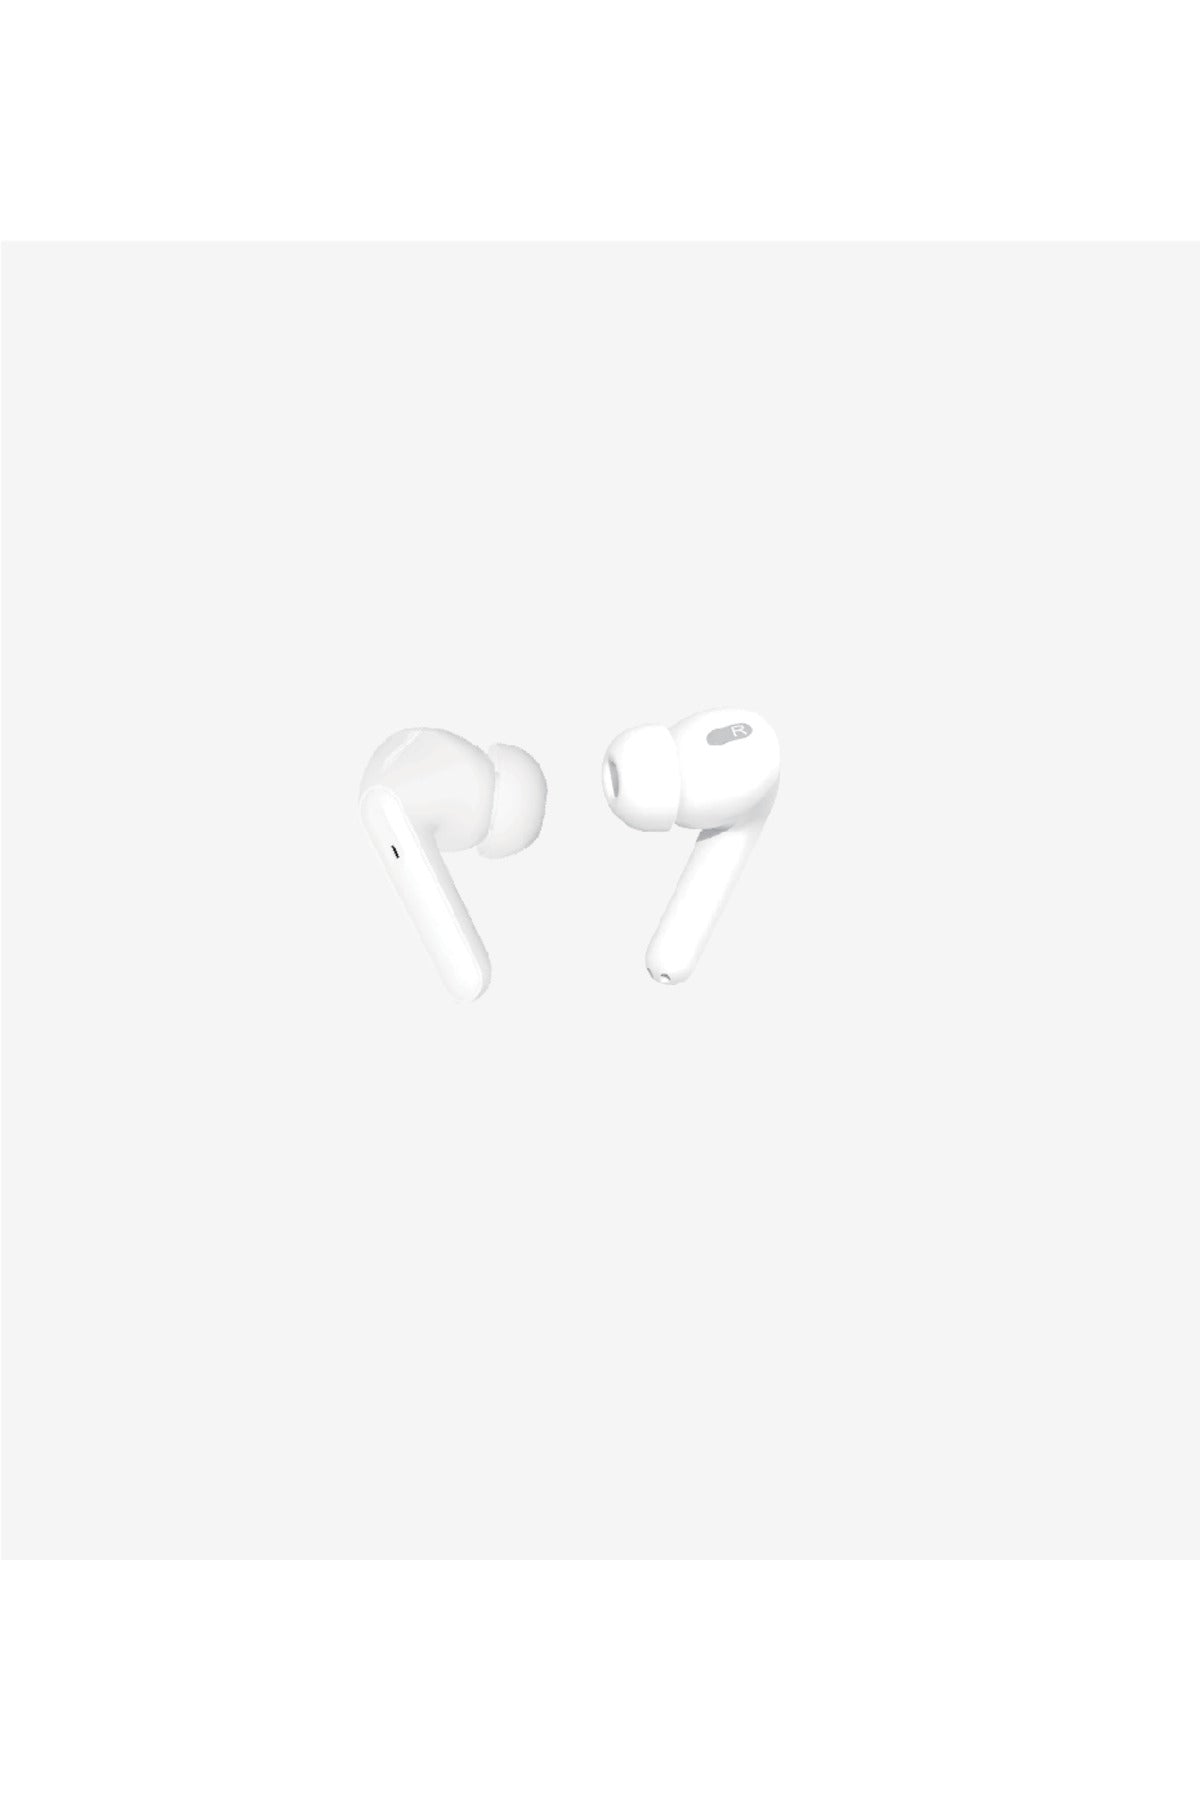 S21 Kulak İçi Oyuncu Bluetooth Kulaklık, Oyuncu Kulaklık.